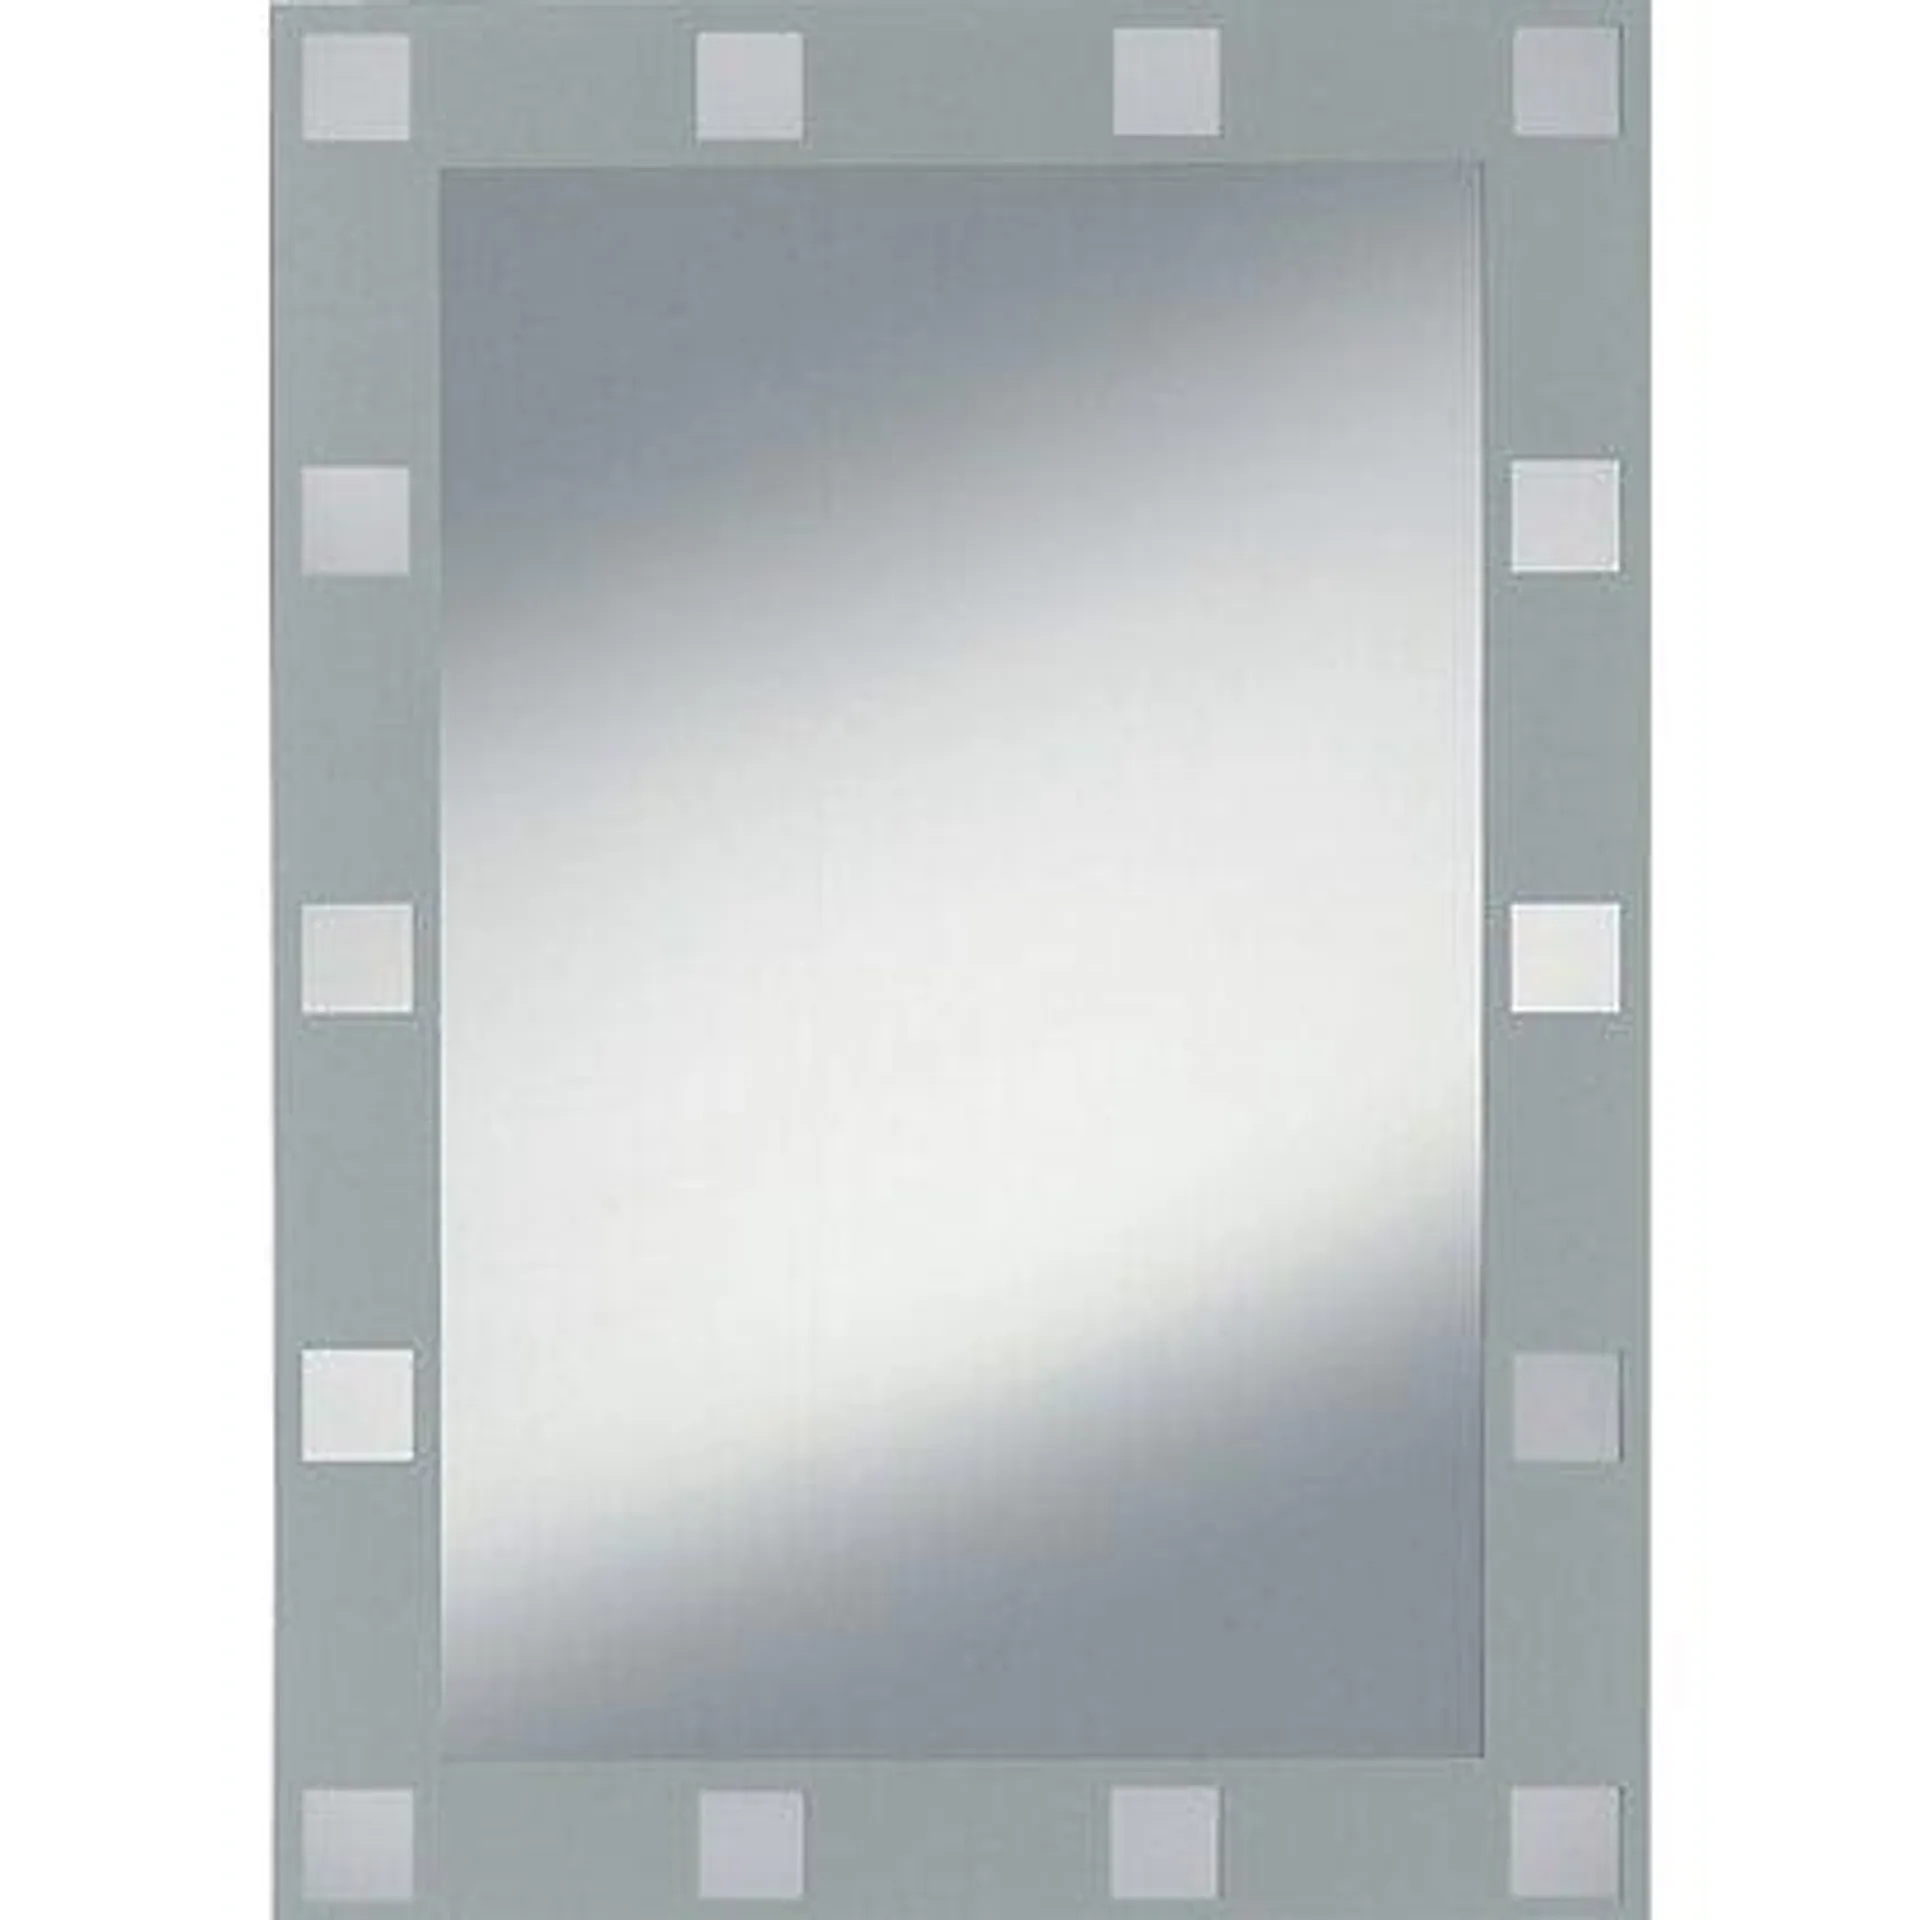 Kristall-Form Zrcadlo se sítotiskem Domino, stříbrné, 70 x 50 cm